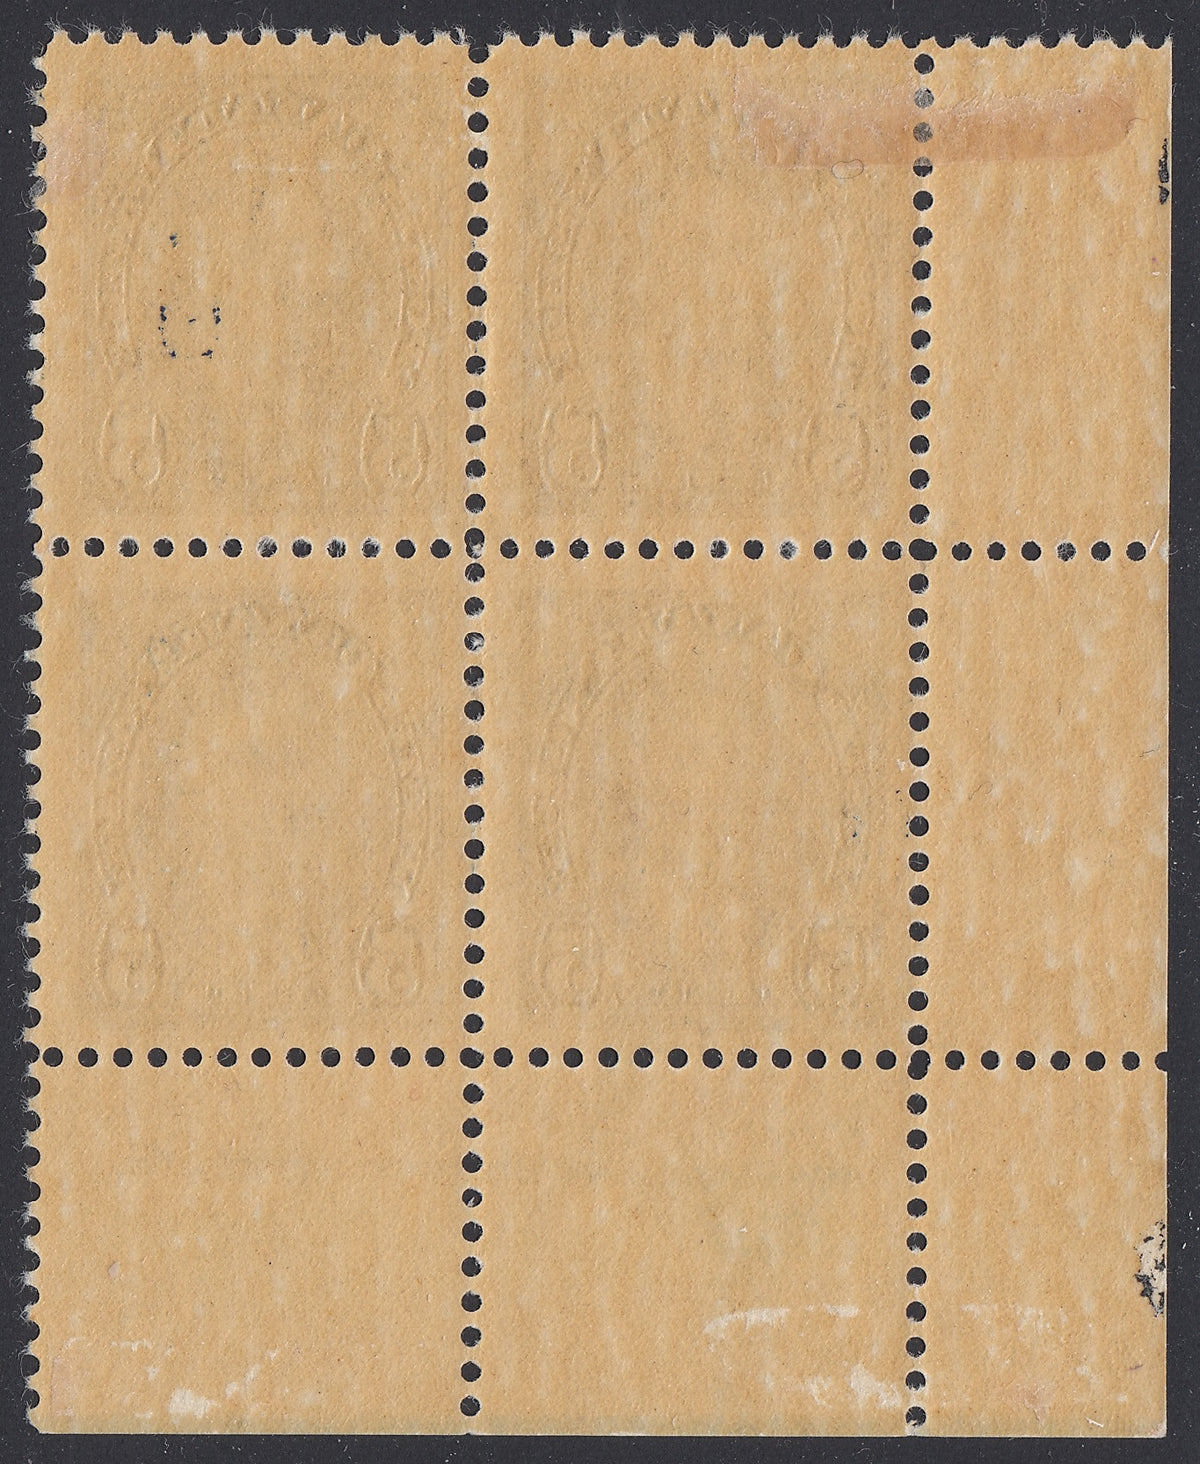 0235CA2012 - Canada #235xx Block - Mint, Cracked Plate